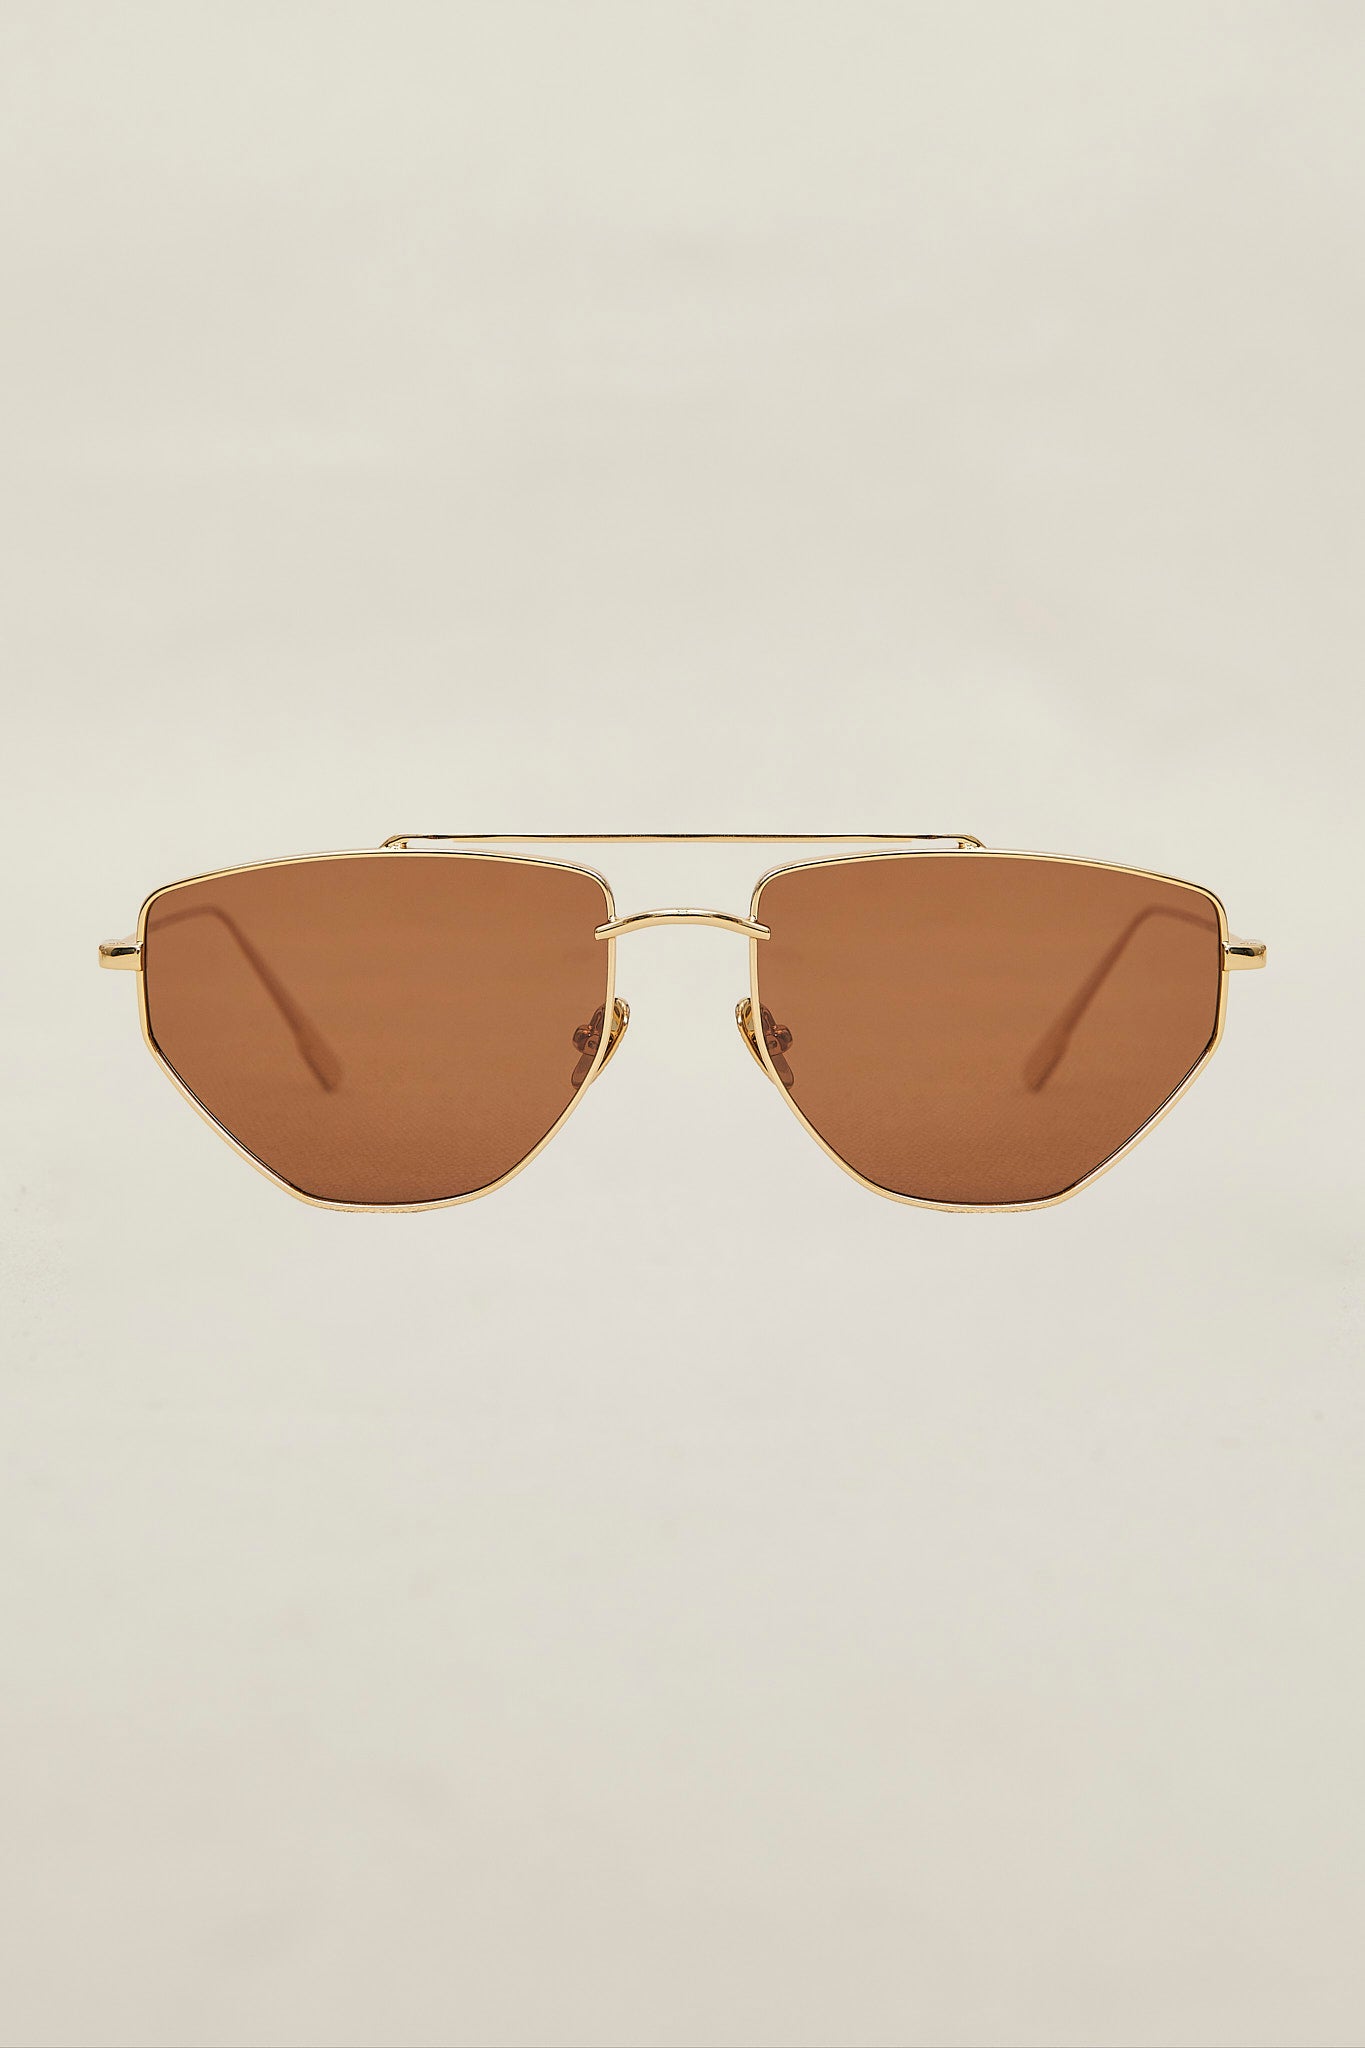 Devon Windsor Rio Sunglasses